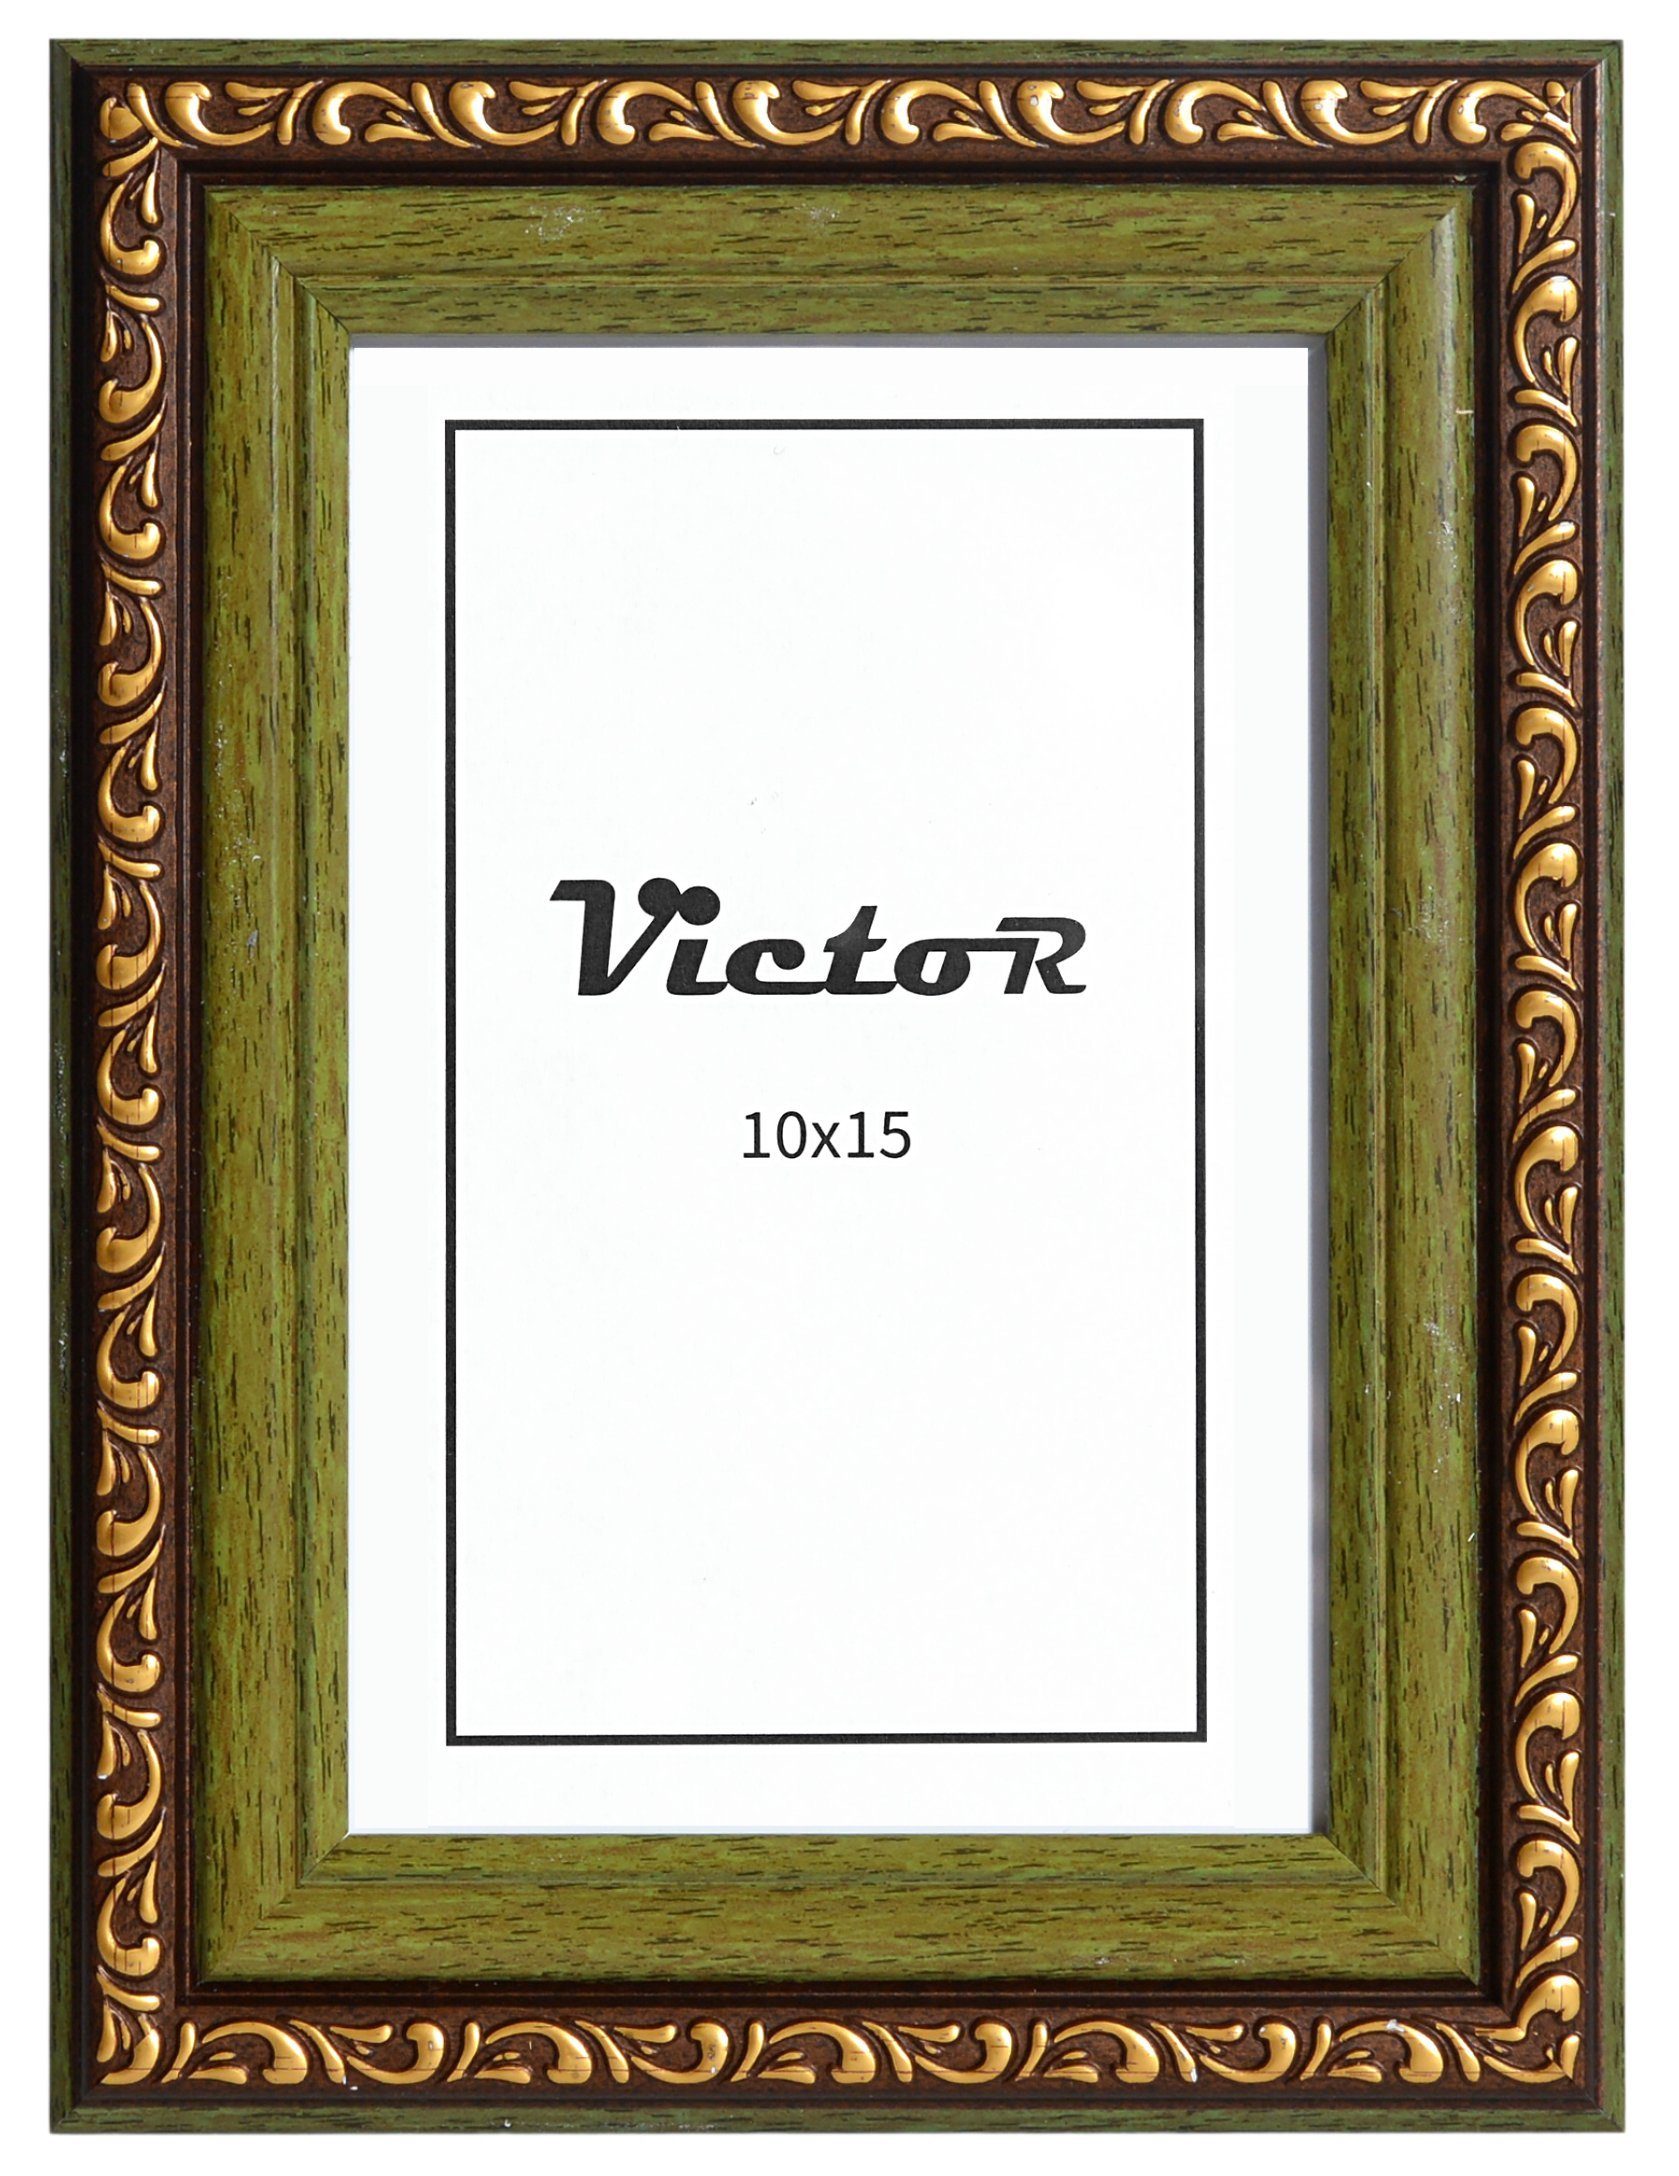 (Zenith) A6, Bilderrahmen Victor Bilderrahmen Grün cm Braun Antiker 10x15 Bilderrahmen Barock Chagall,